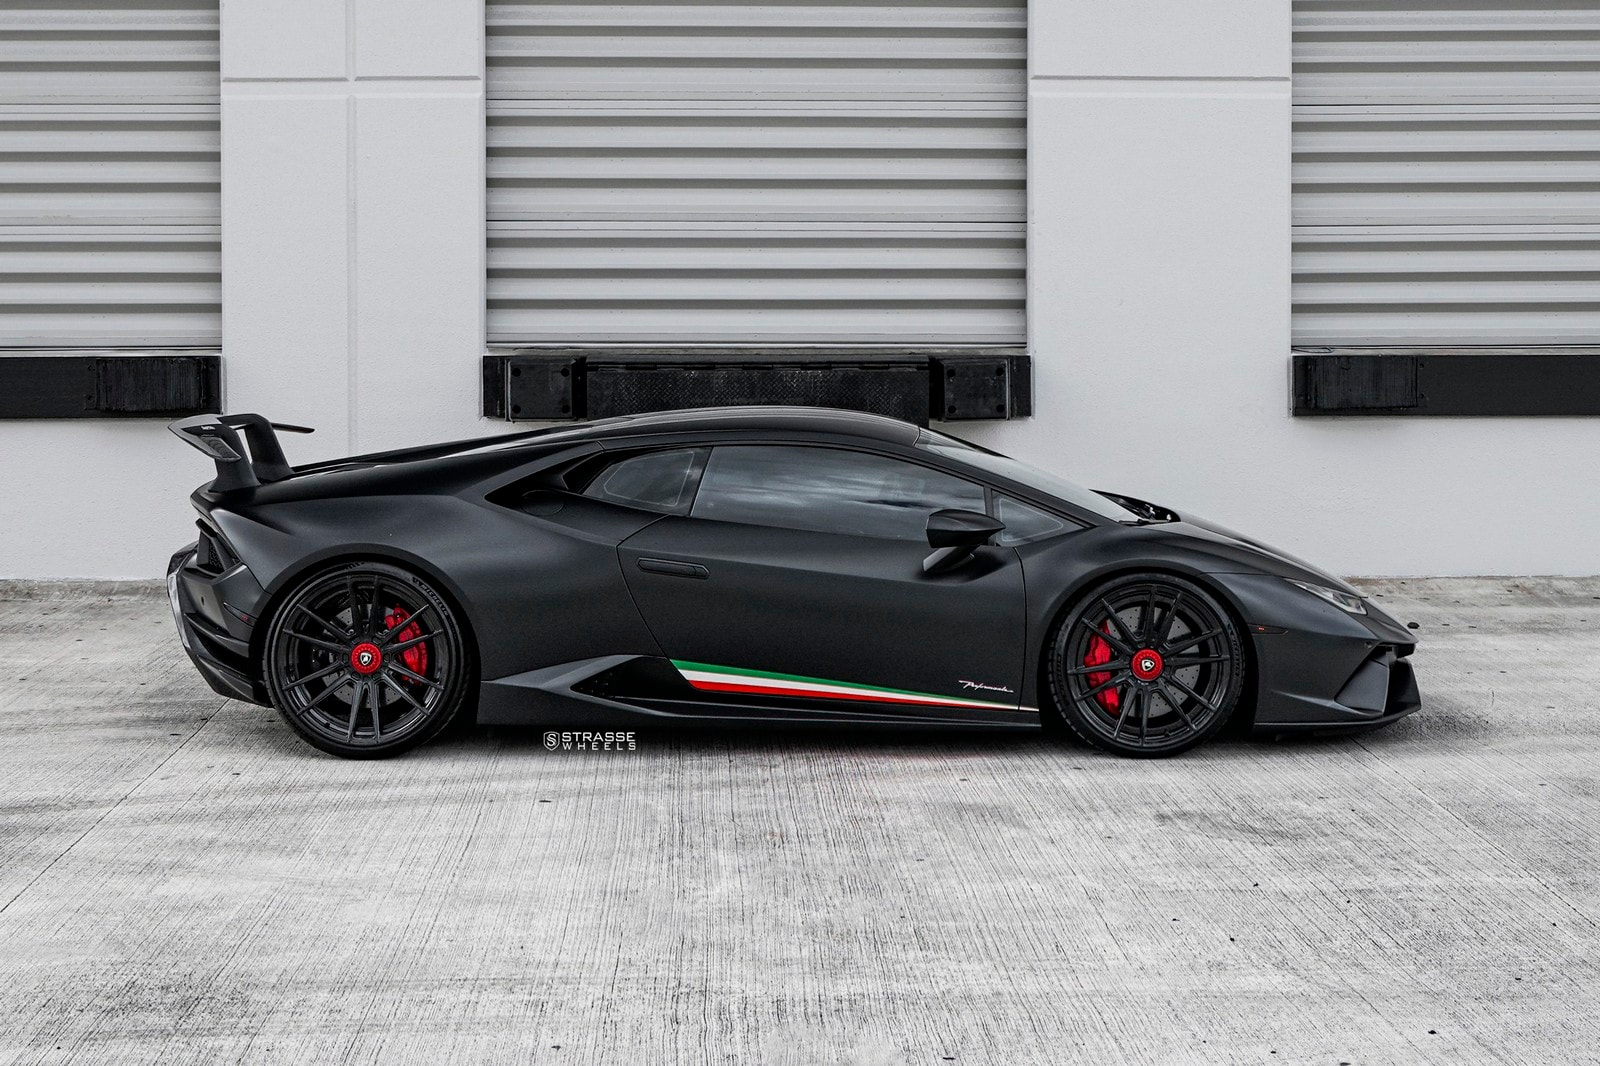 SelfMade Motorsports 打造 Lamborghini Huracan Performante 渦輪強化改裝車型